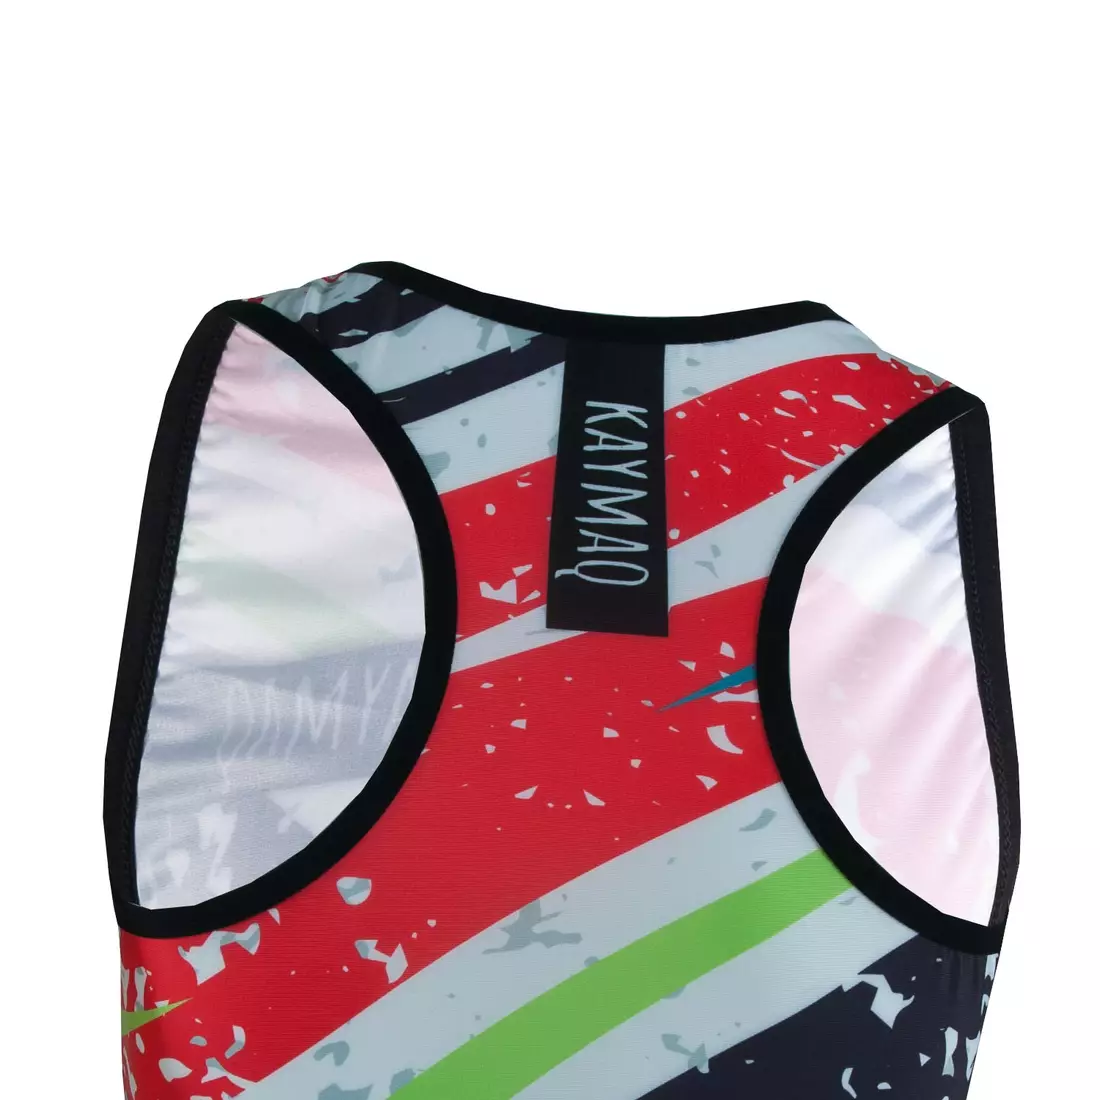 KAYMAQ DESIGN W25 dámský cyklistický dres bez rukávů 01.218, růžový